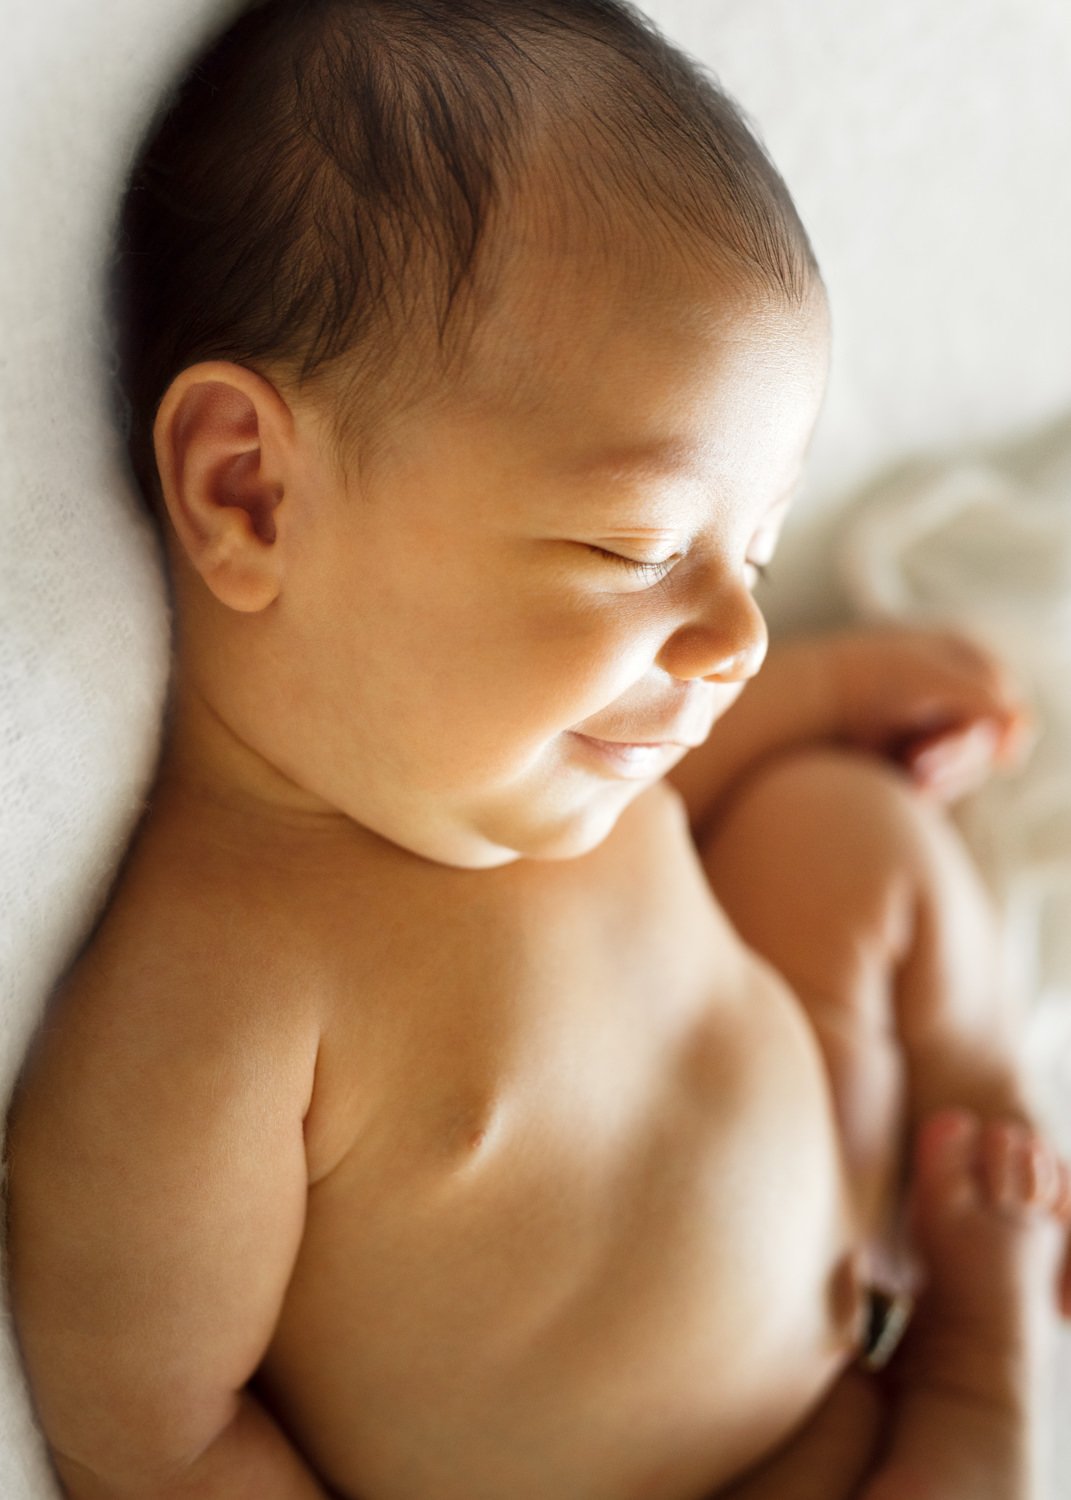 Newborn Baby Smiling In Sleep